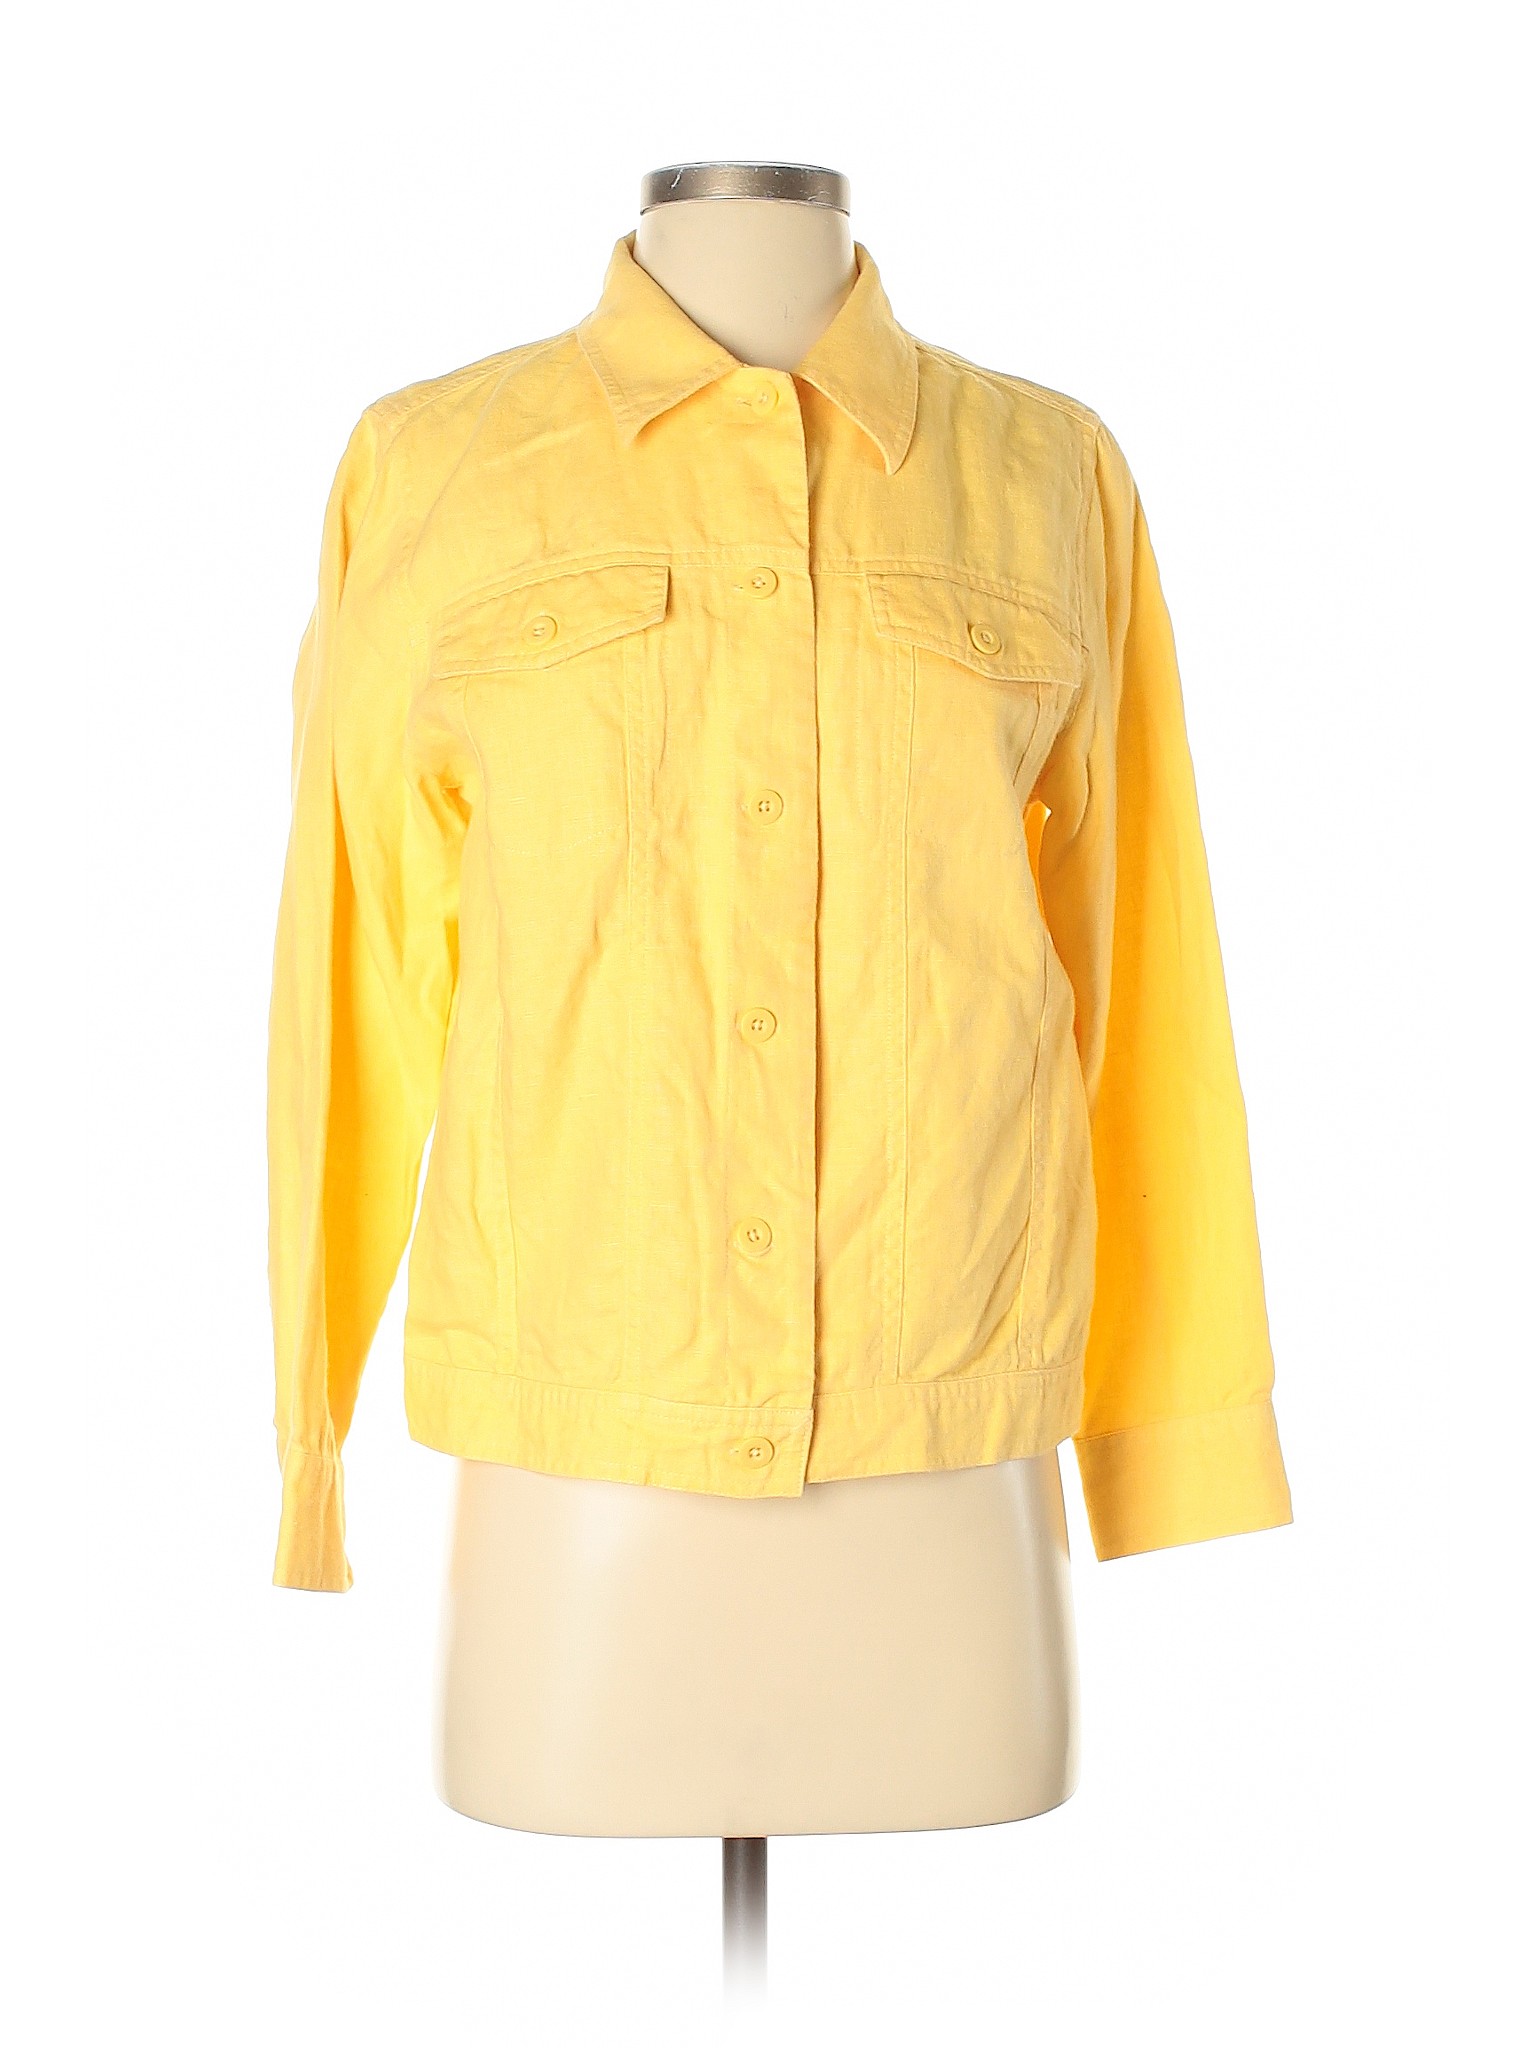 Relativity Women Yellow Jacket S | eBay